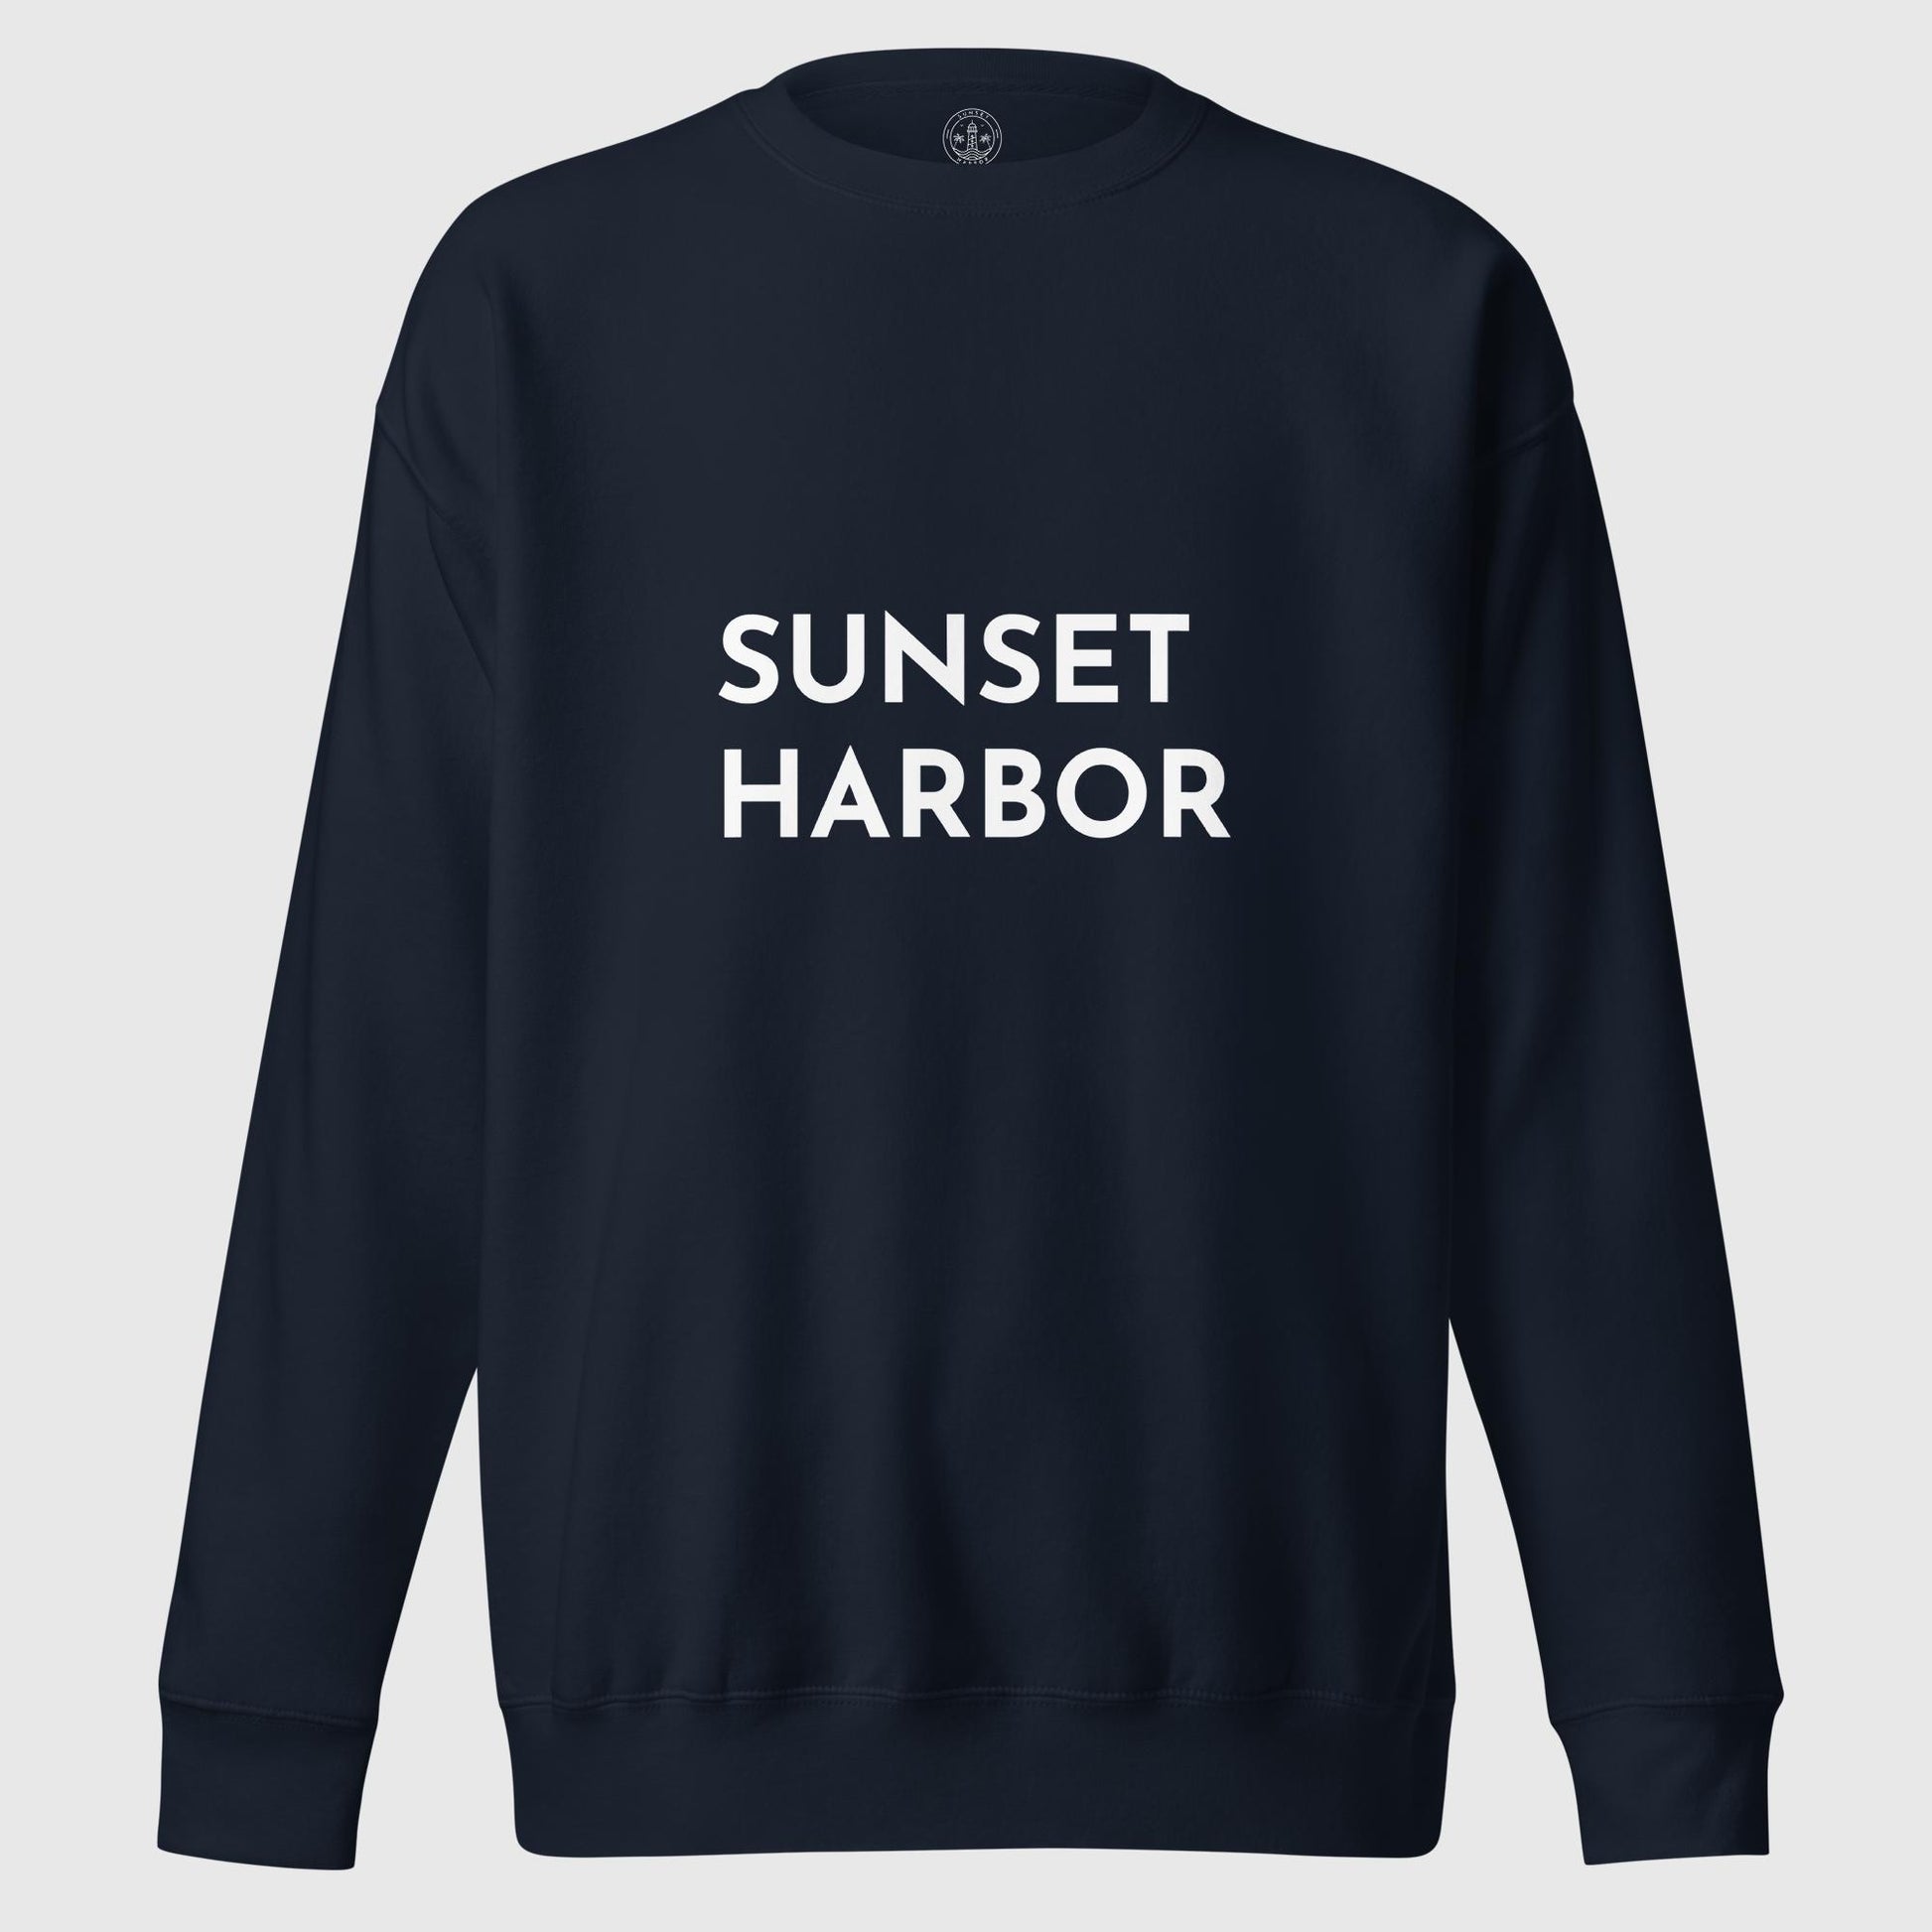 Unisex Premium Sweatshirt - Sunset Harbor - Sunset Harbor Clothing